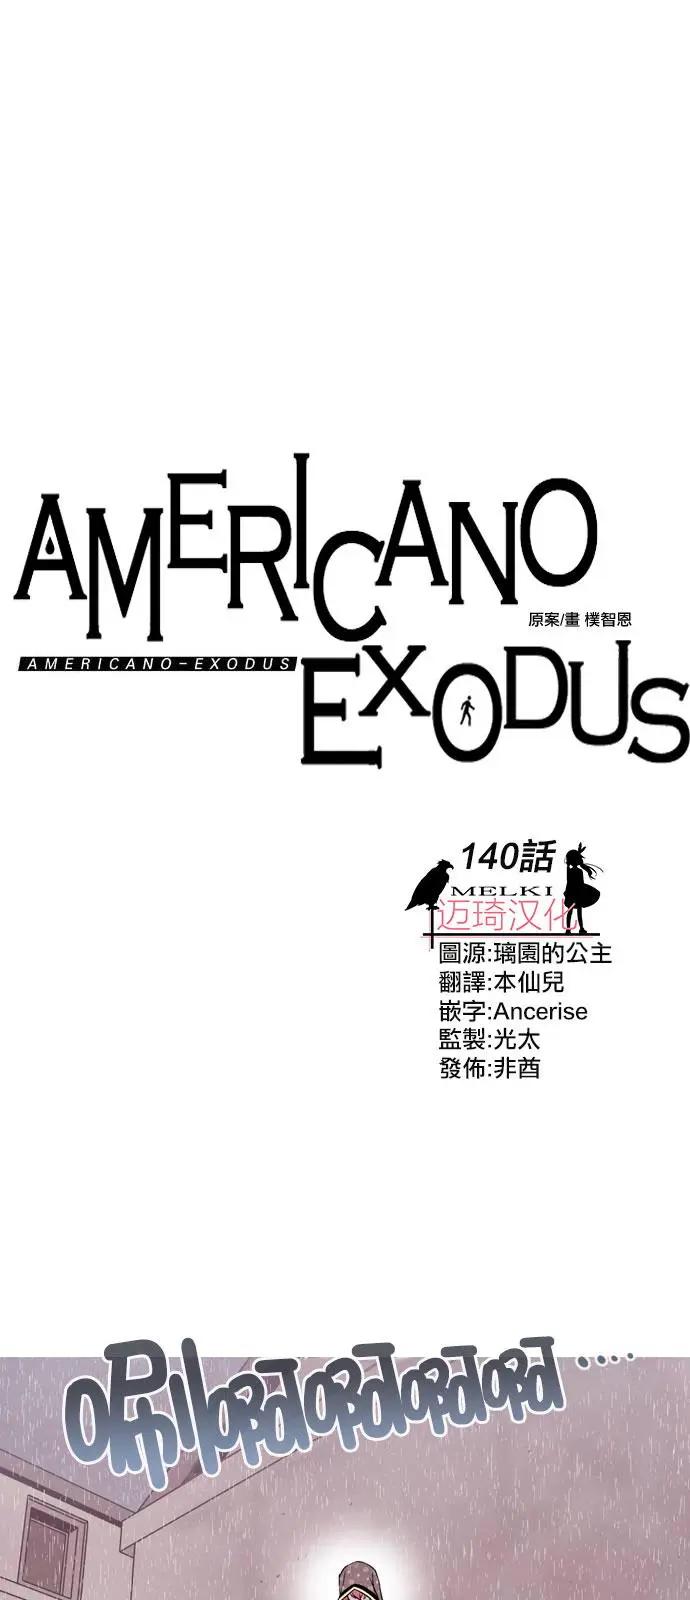 Americano-exodus - 第140回 - 1